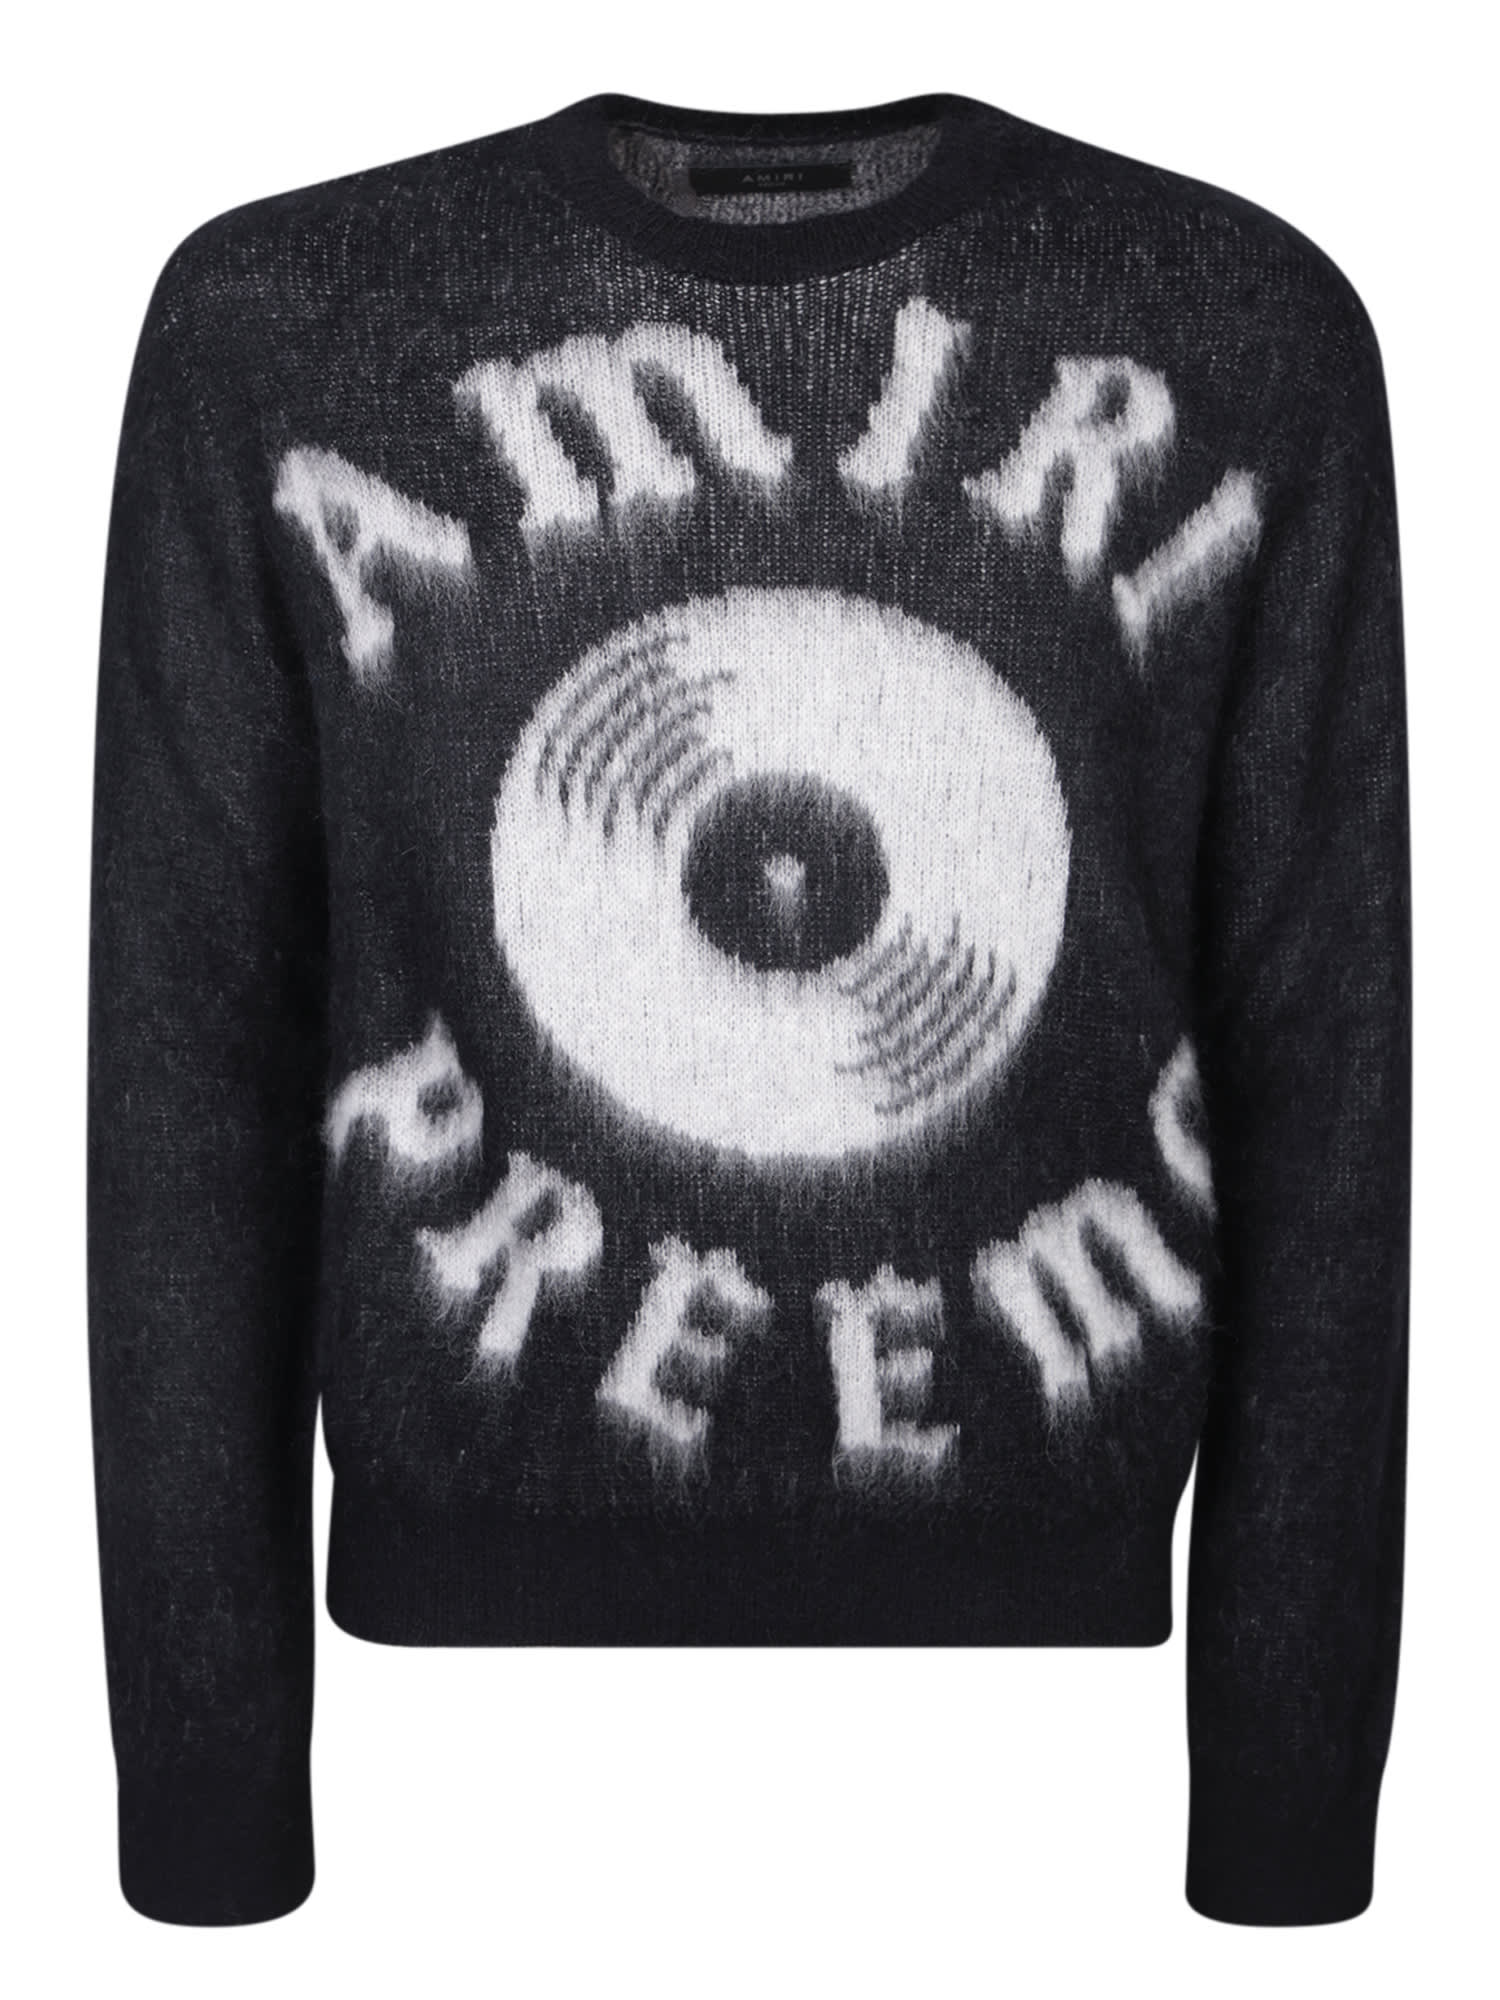 Preemo Black Sweatshirt